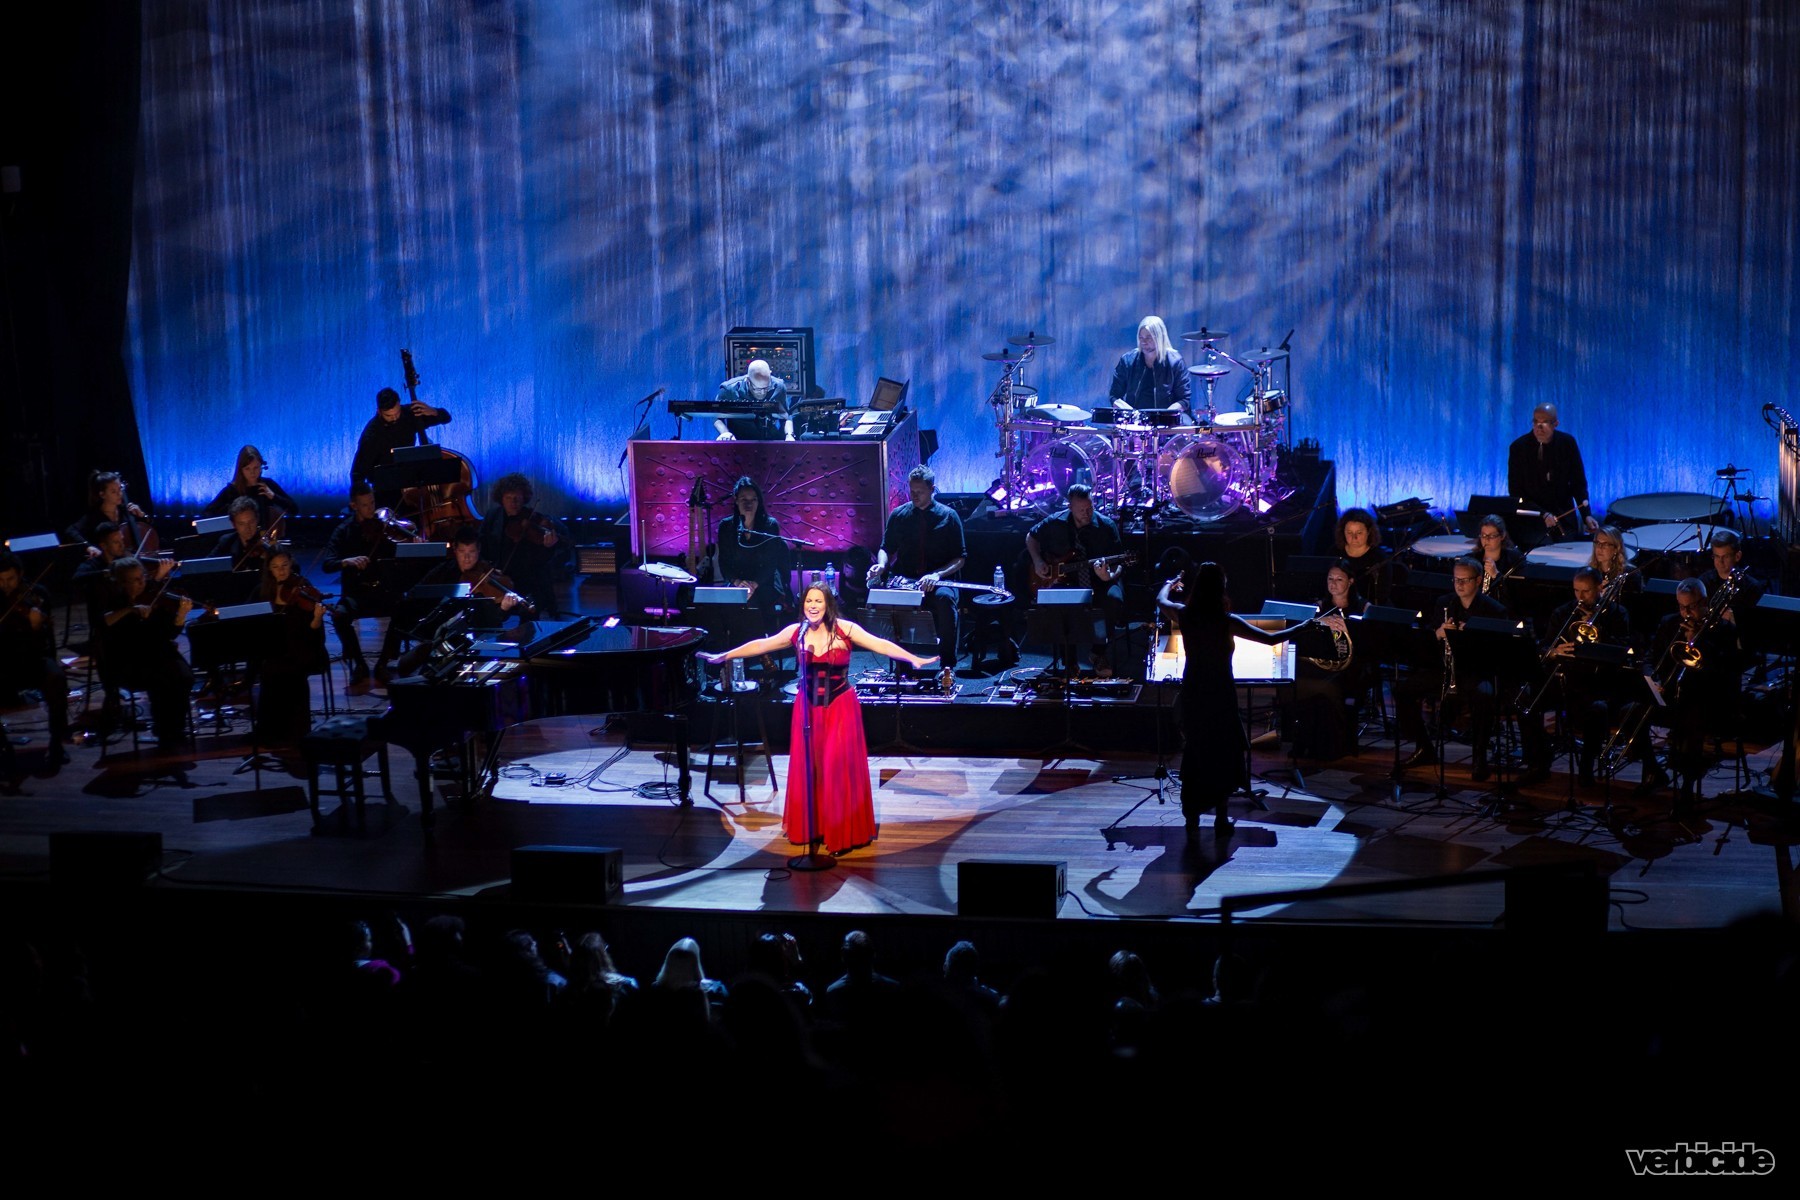 Photos: Evanescence at the Ryman Auditorium, Nashville 10/25/17